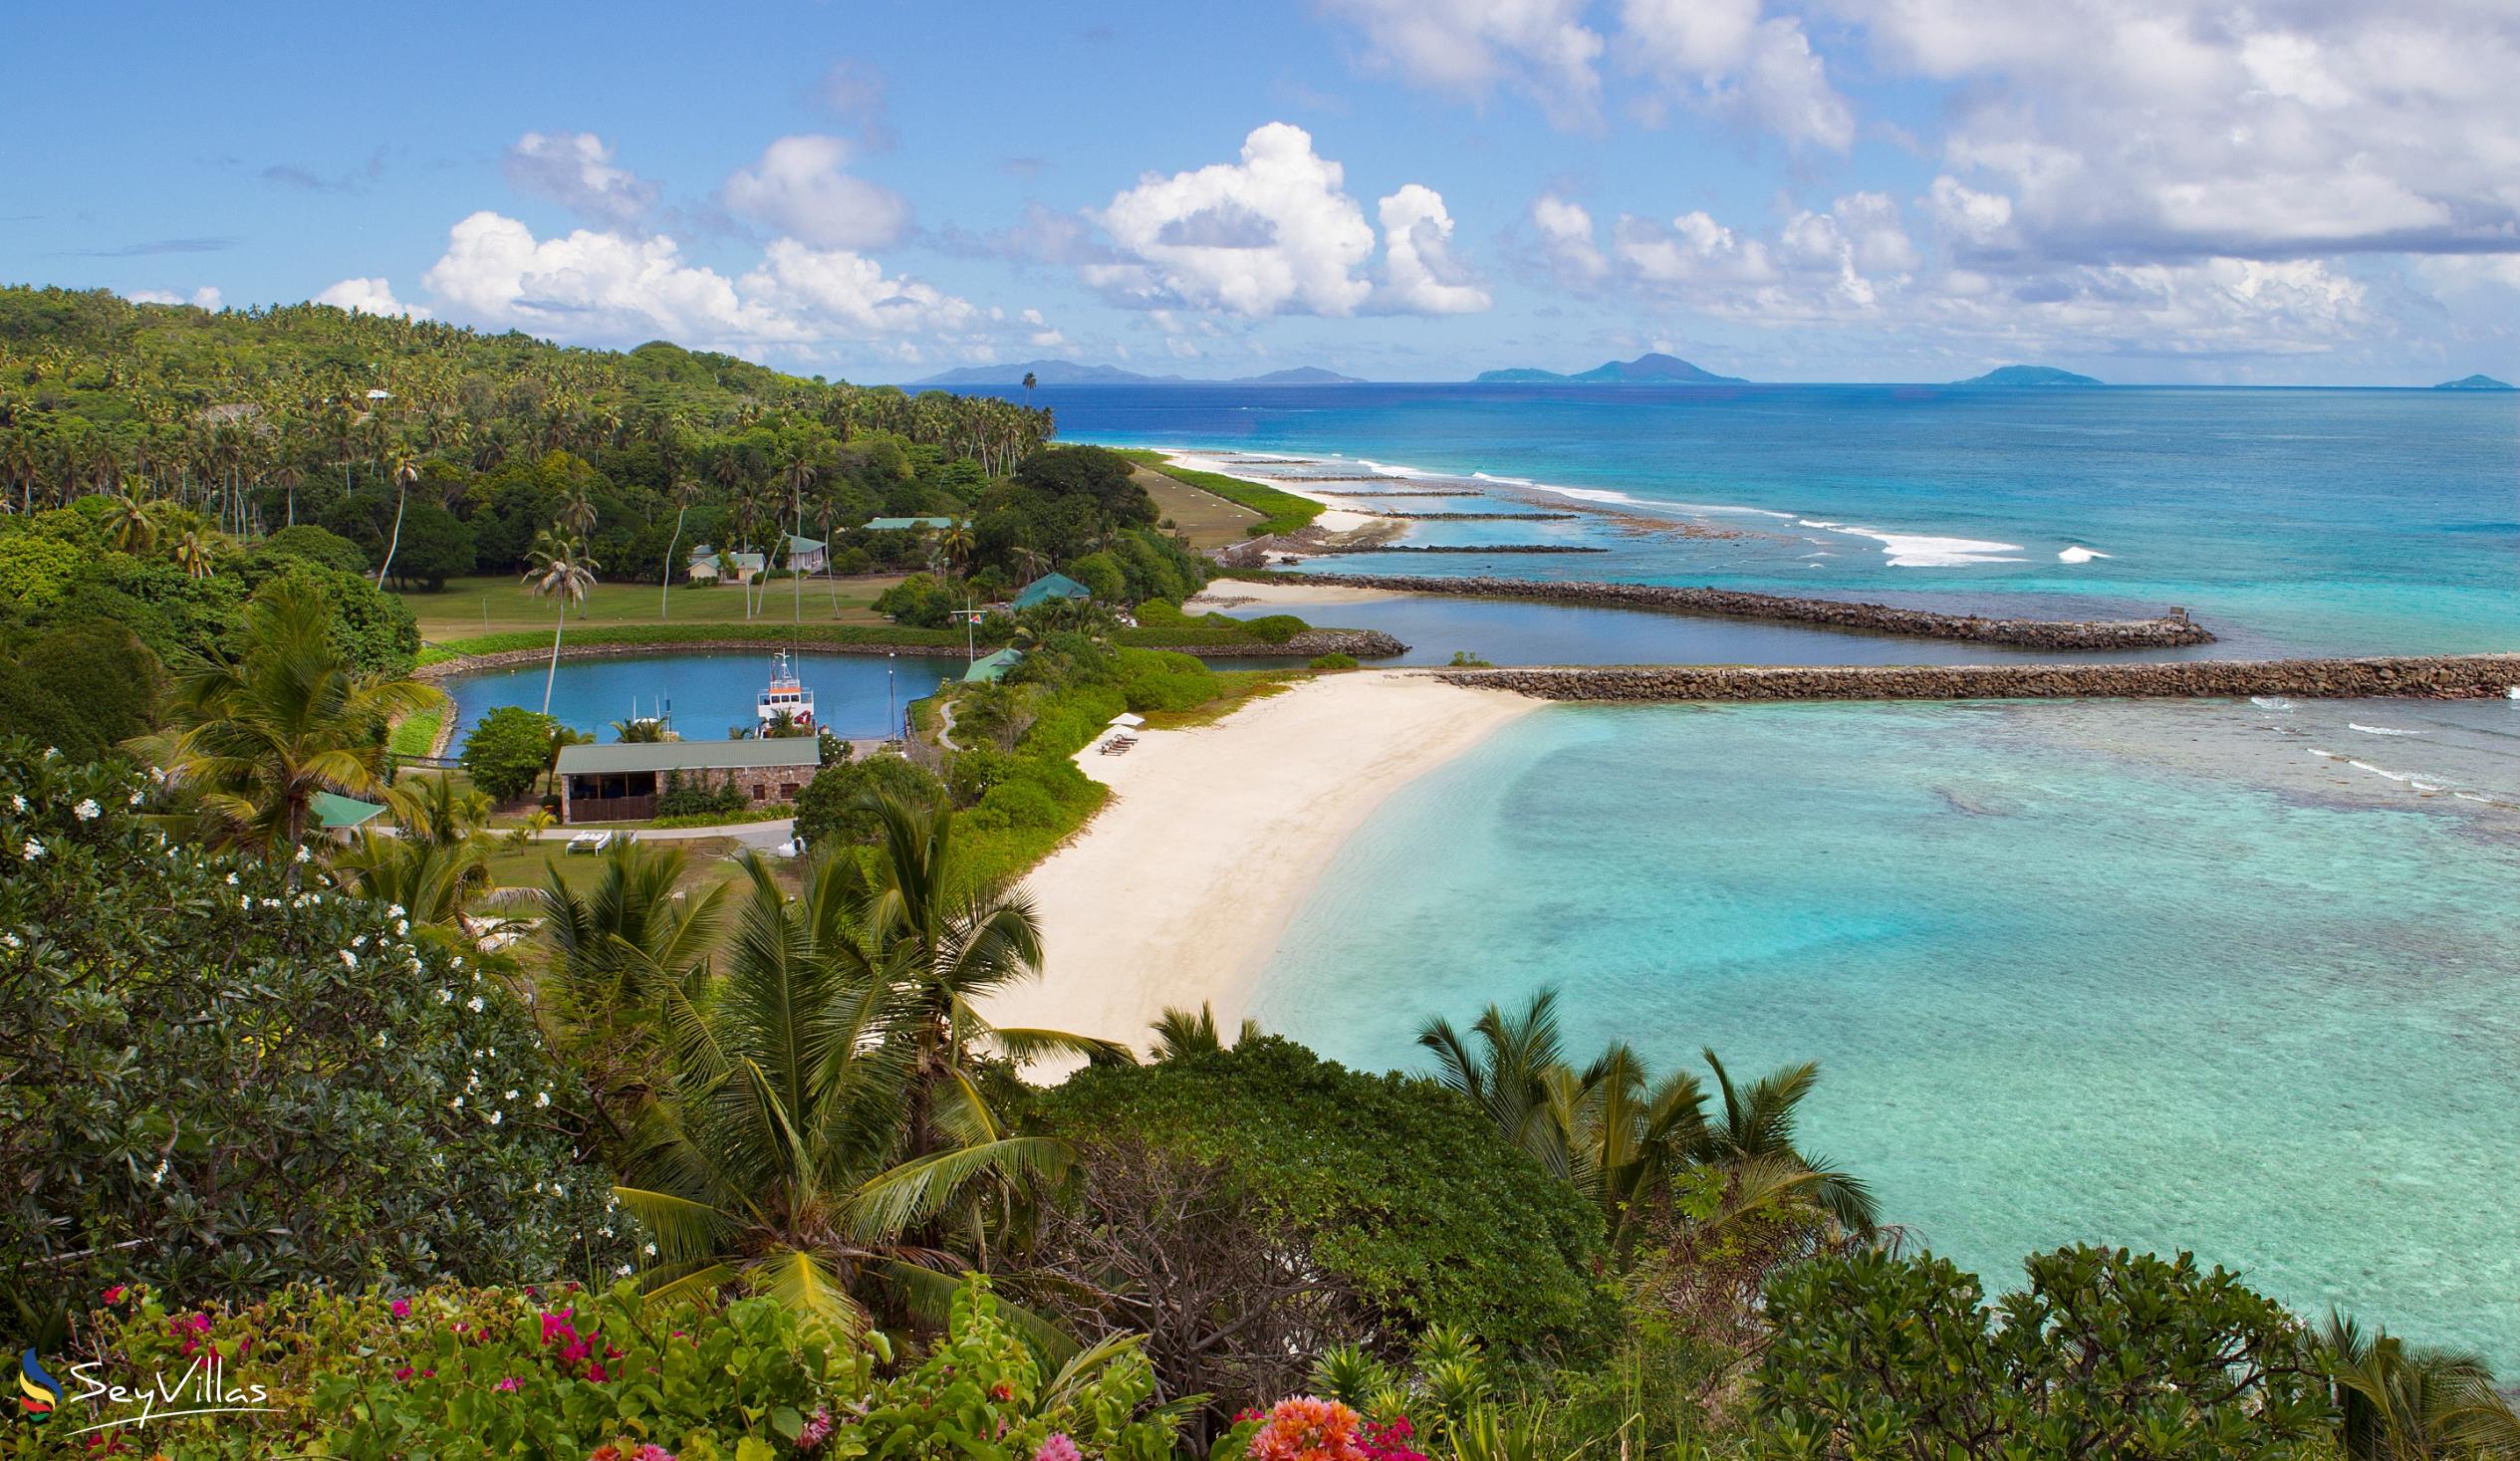 Photo 1: Marina Beach - Frégate - Other islands (Seychelles)